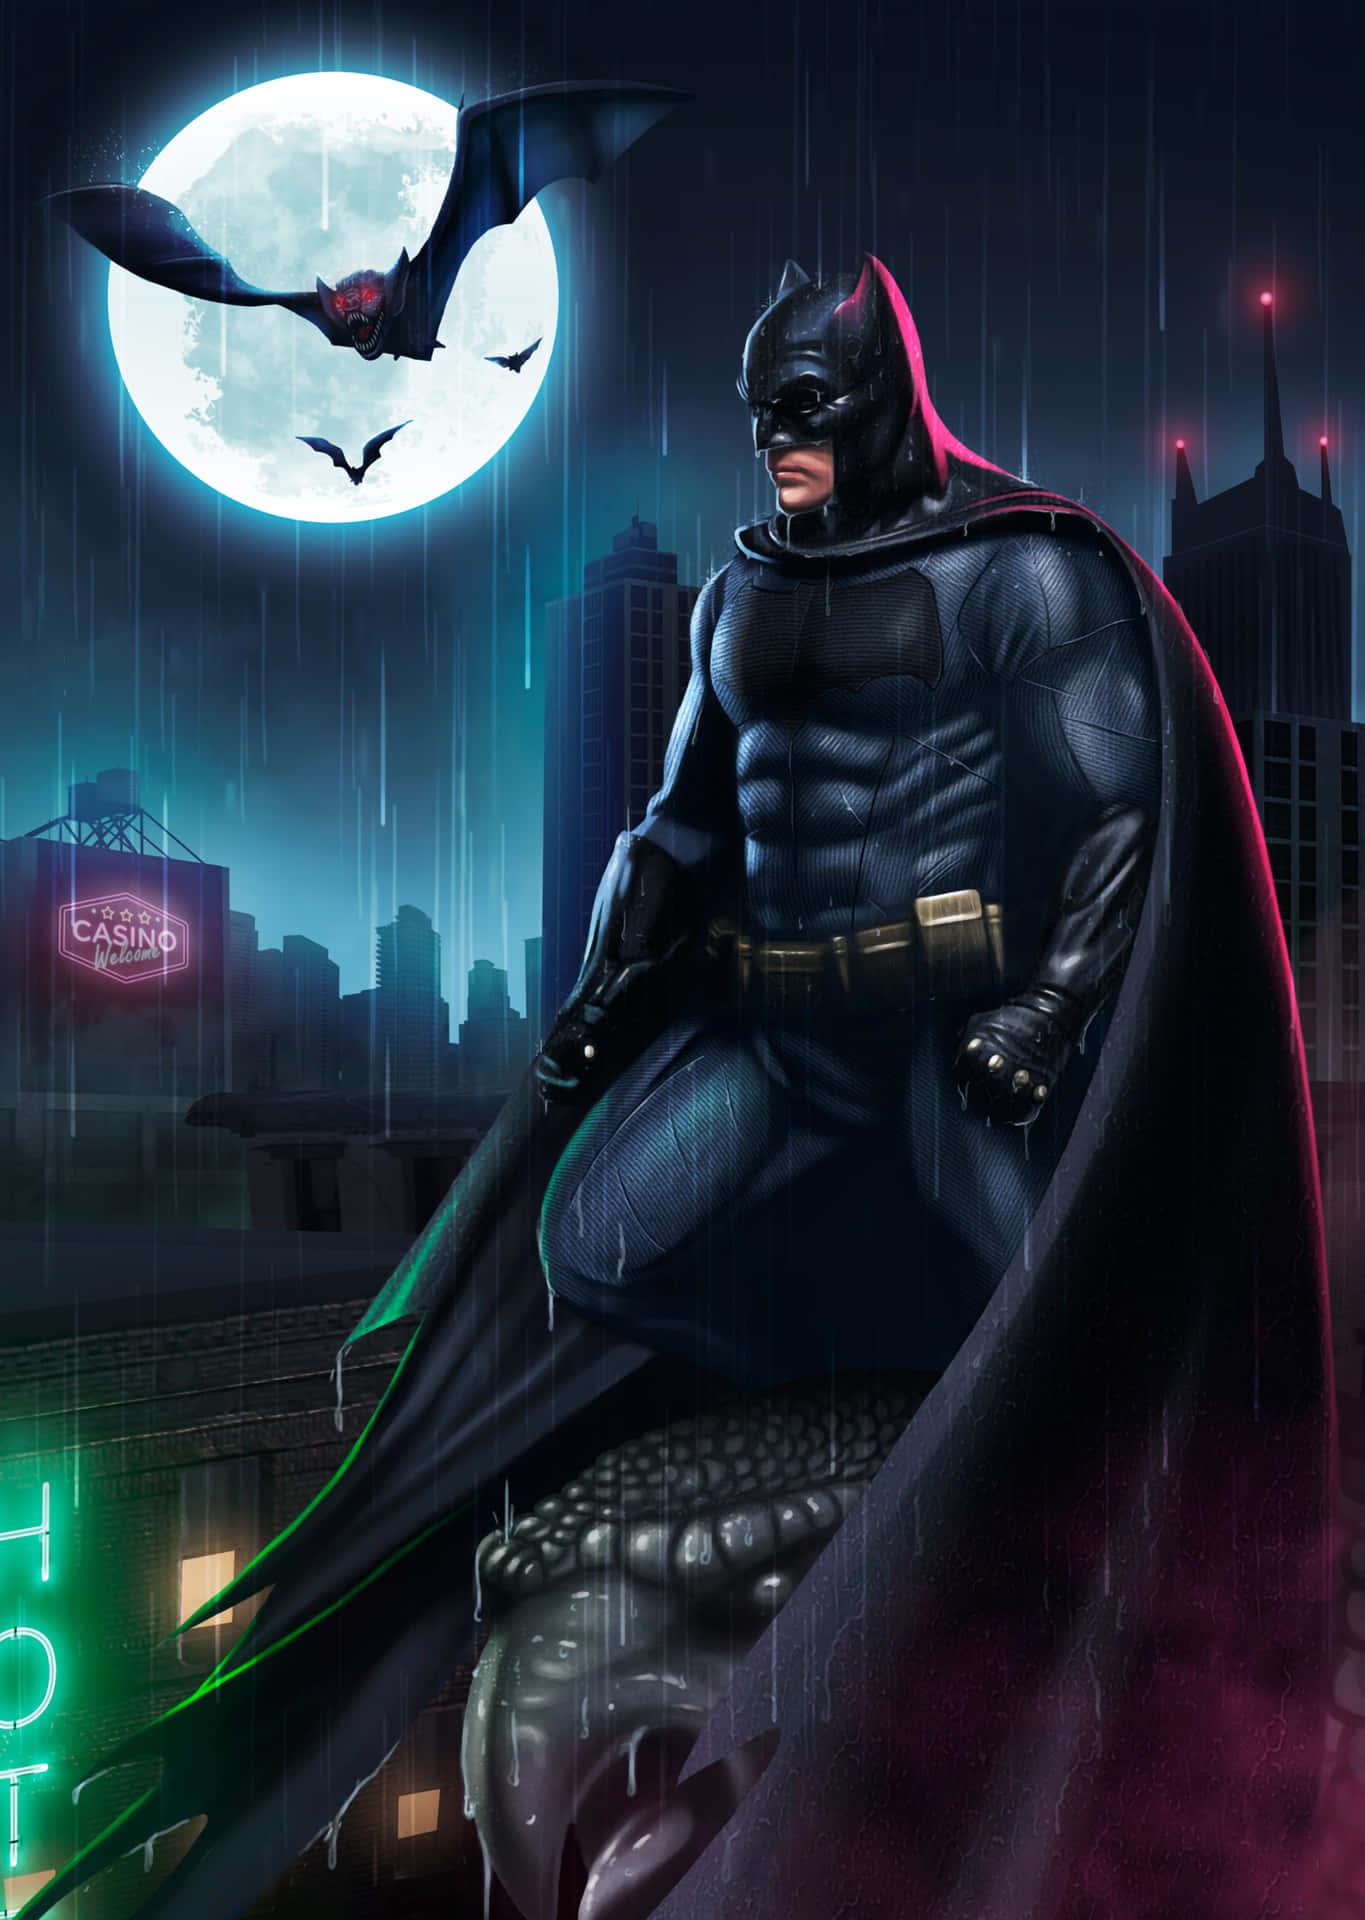 Batman Digital Art Under Full Moon And Rain Picture